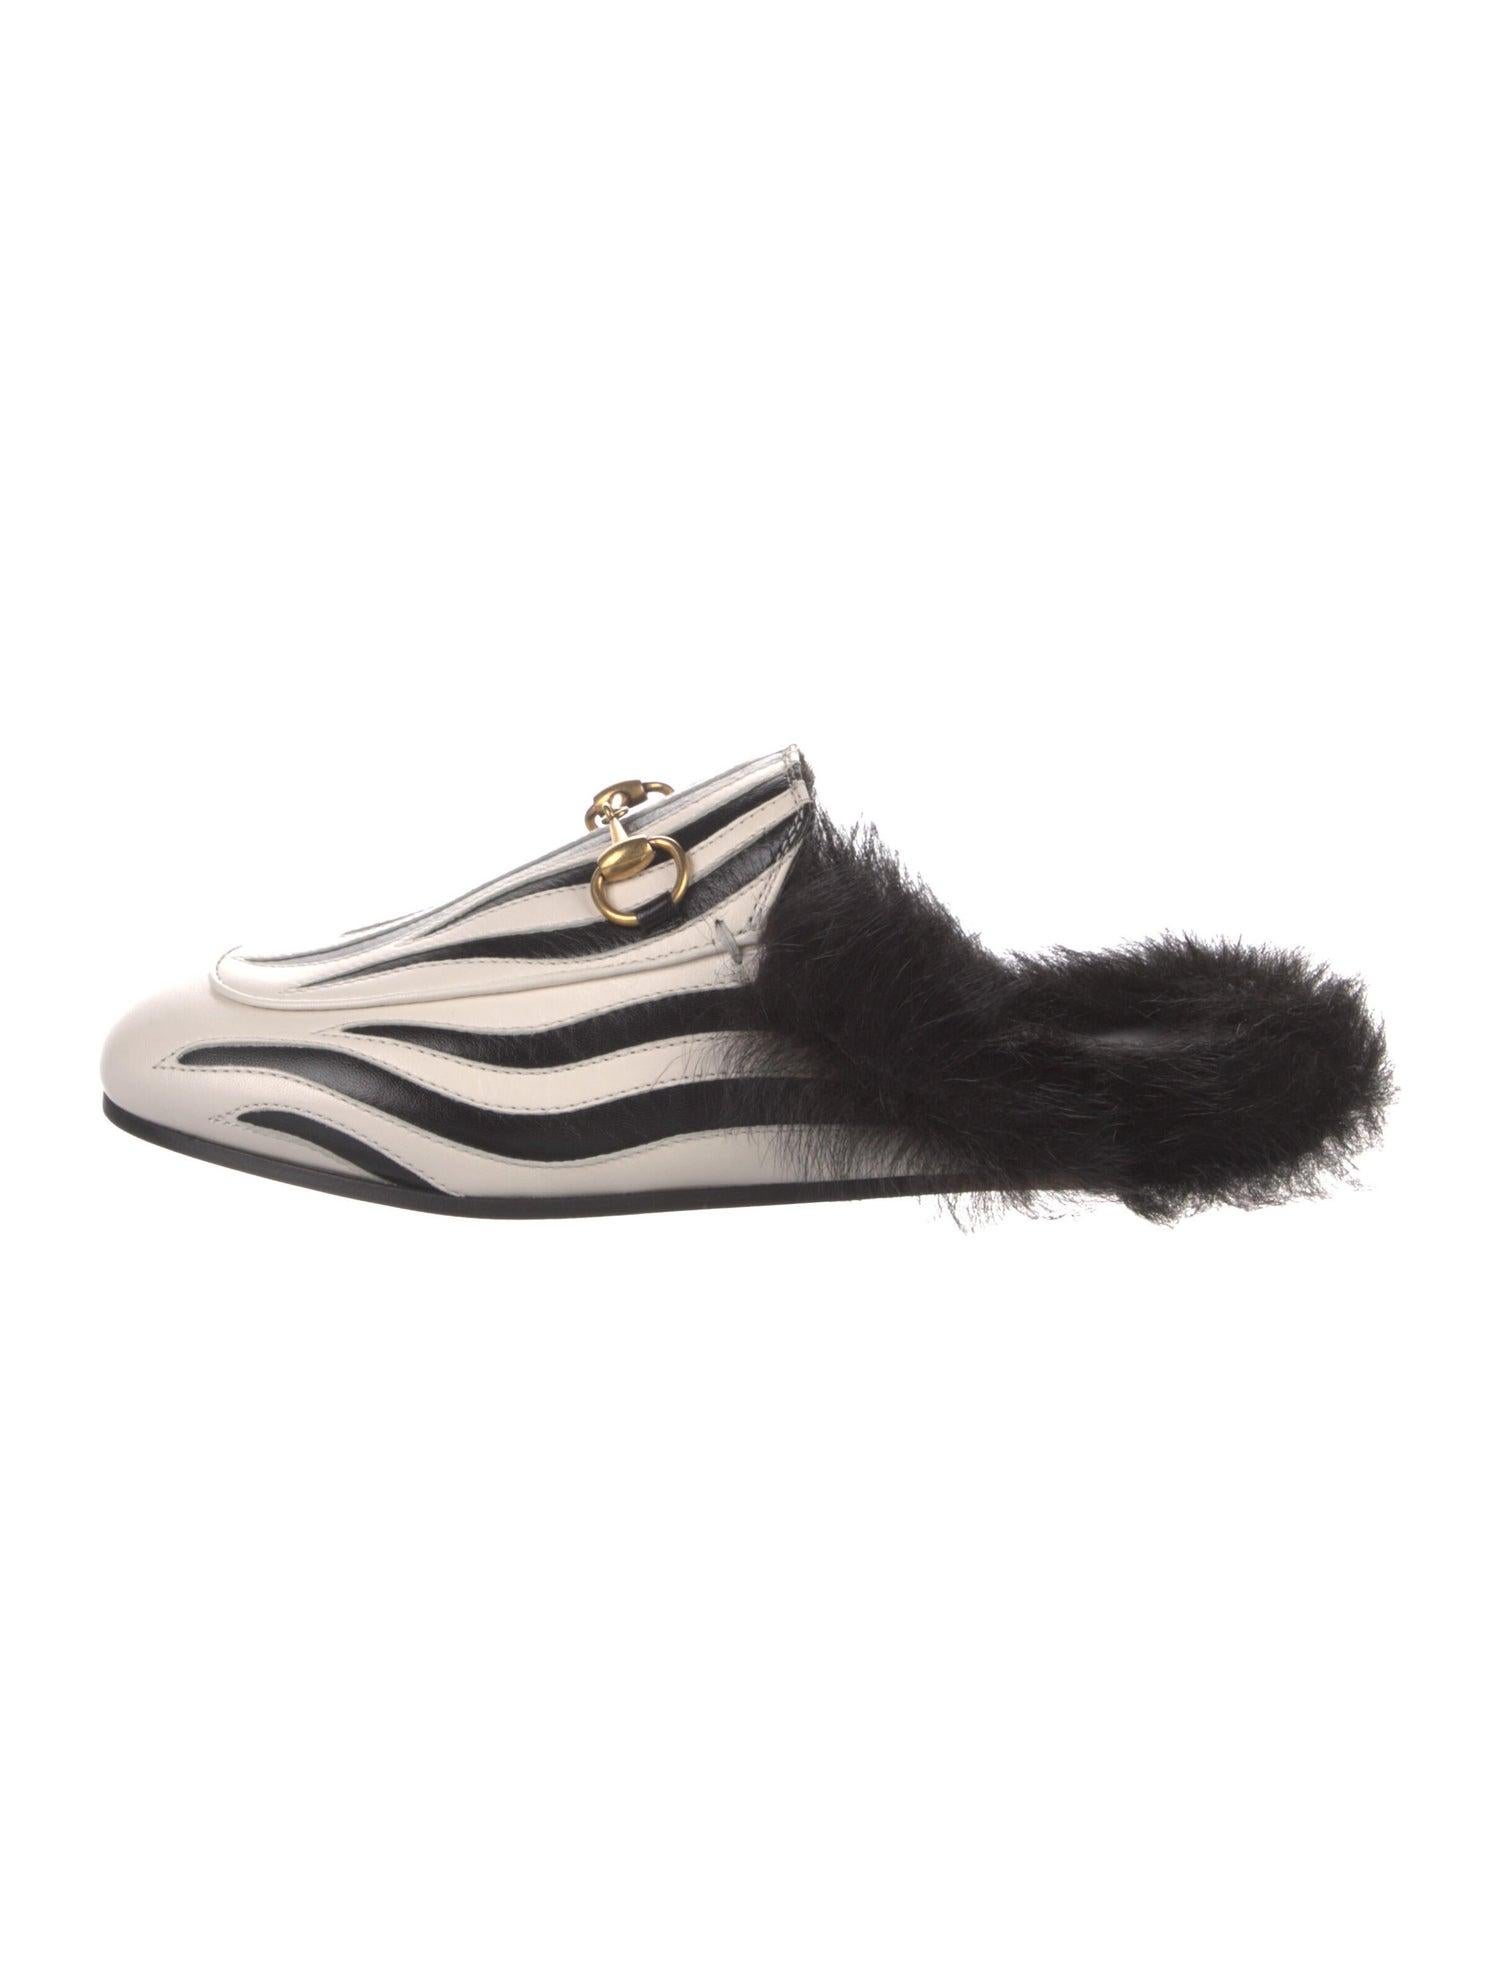 New Gucci Kendall Jenner Princetown  Zebra Faux Fur Loafers Slides Flats Sz 35.5 3